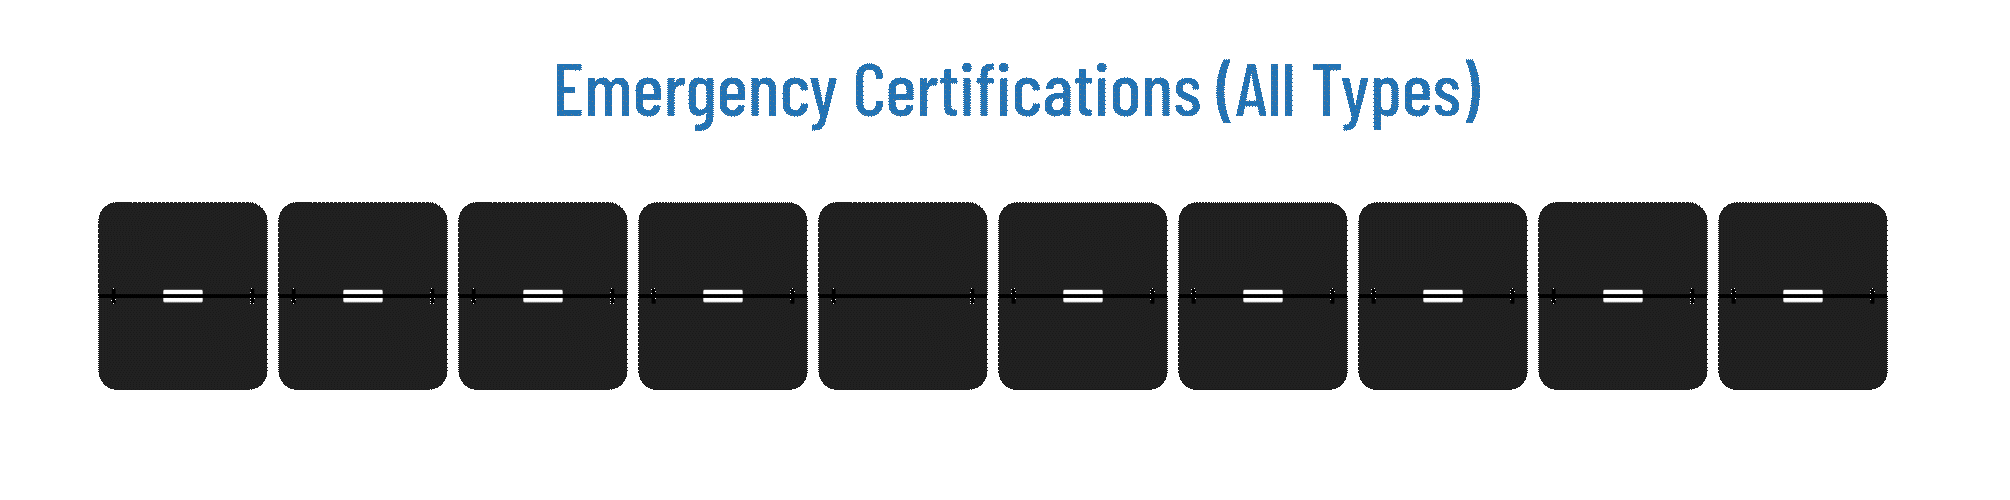 Emergency Certifications (All Types): 2 Weeks